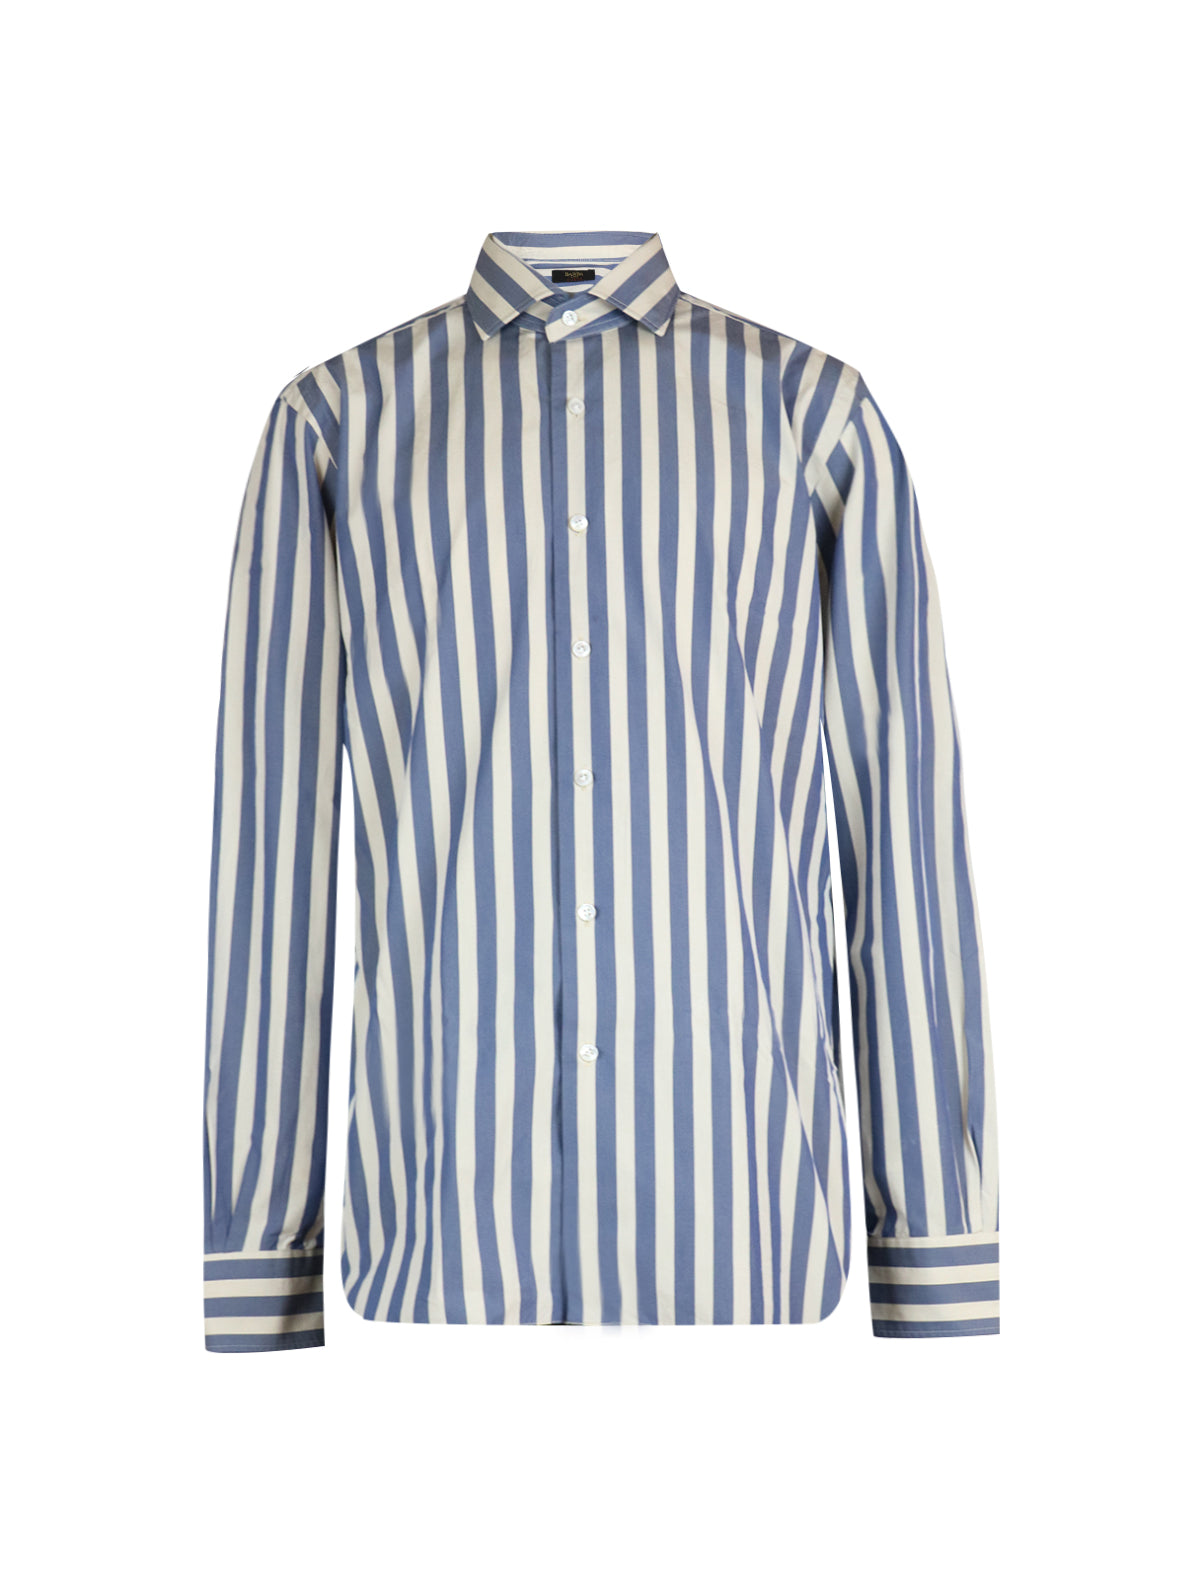 Barba Napoli Crisp Cotton Shirt in Blue / White Stripes